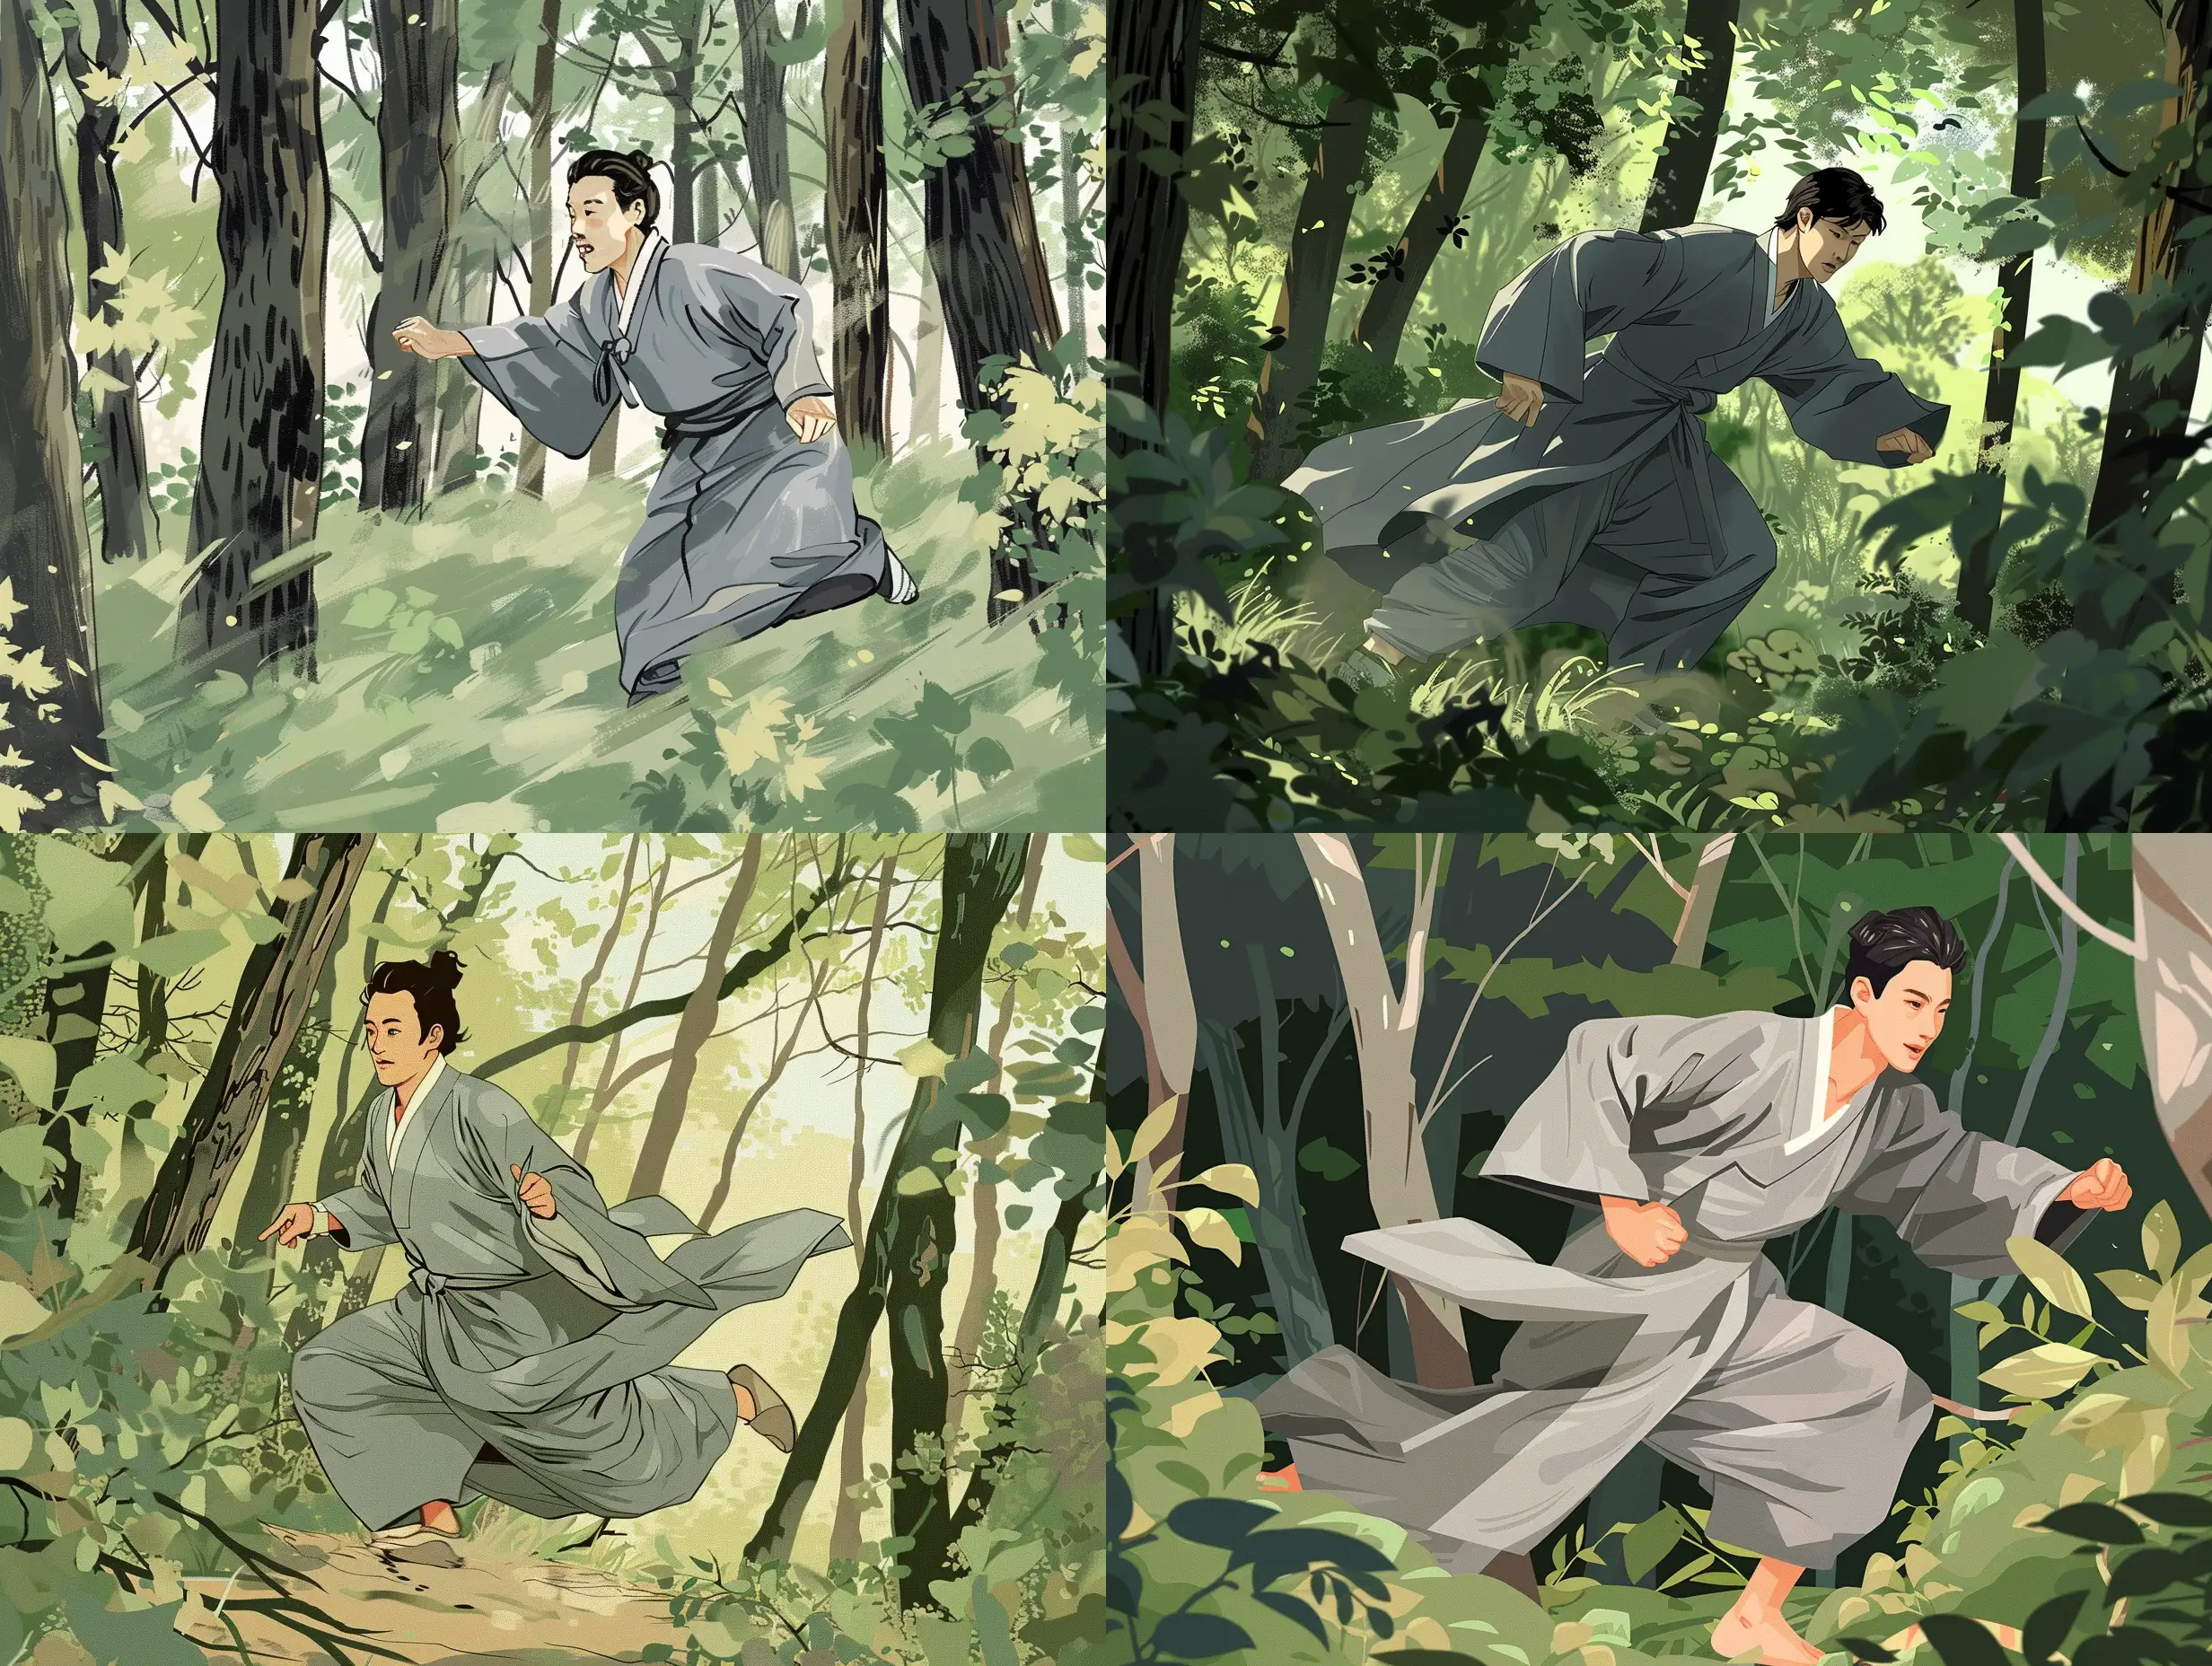 Illustration like fairytale about Korean man in the grey kimono who run through the forest